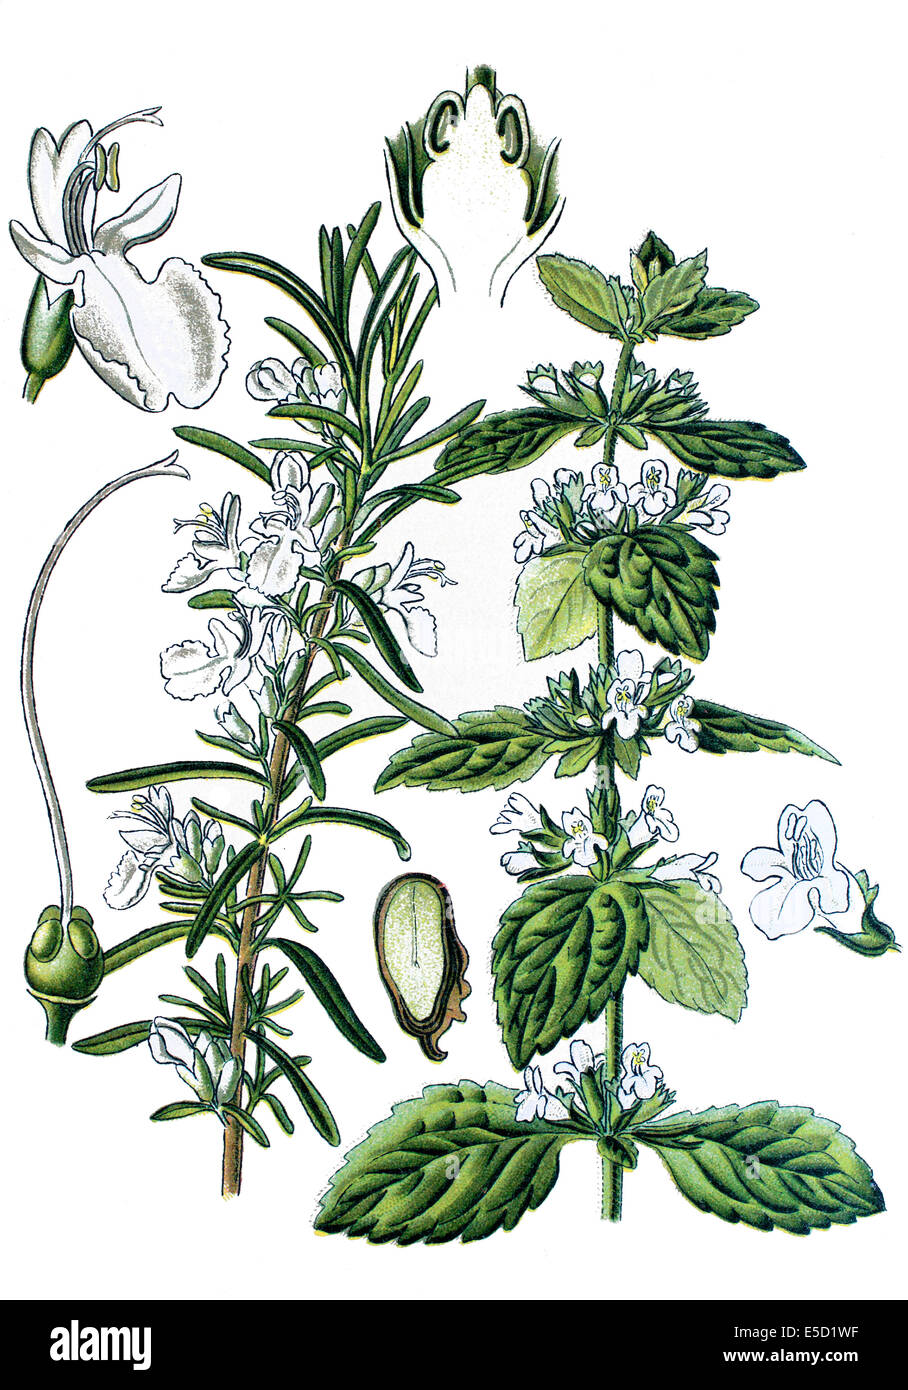 left: rosemary, Rosmarinus officinalis. right: Lemon balm, Melissa officinalis Stock Photo